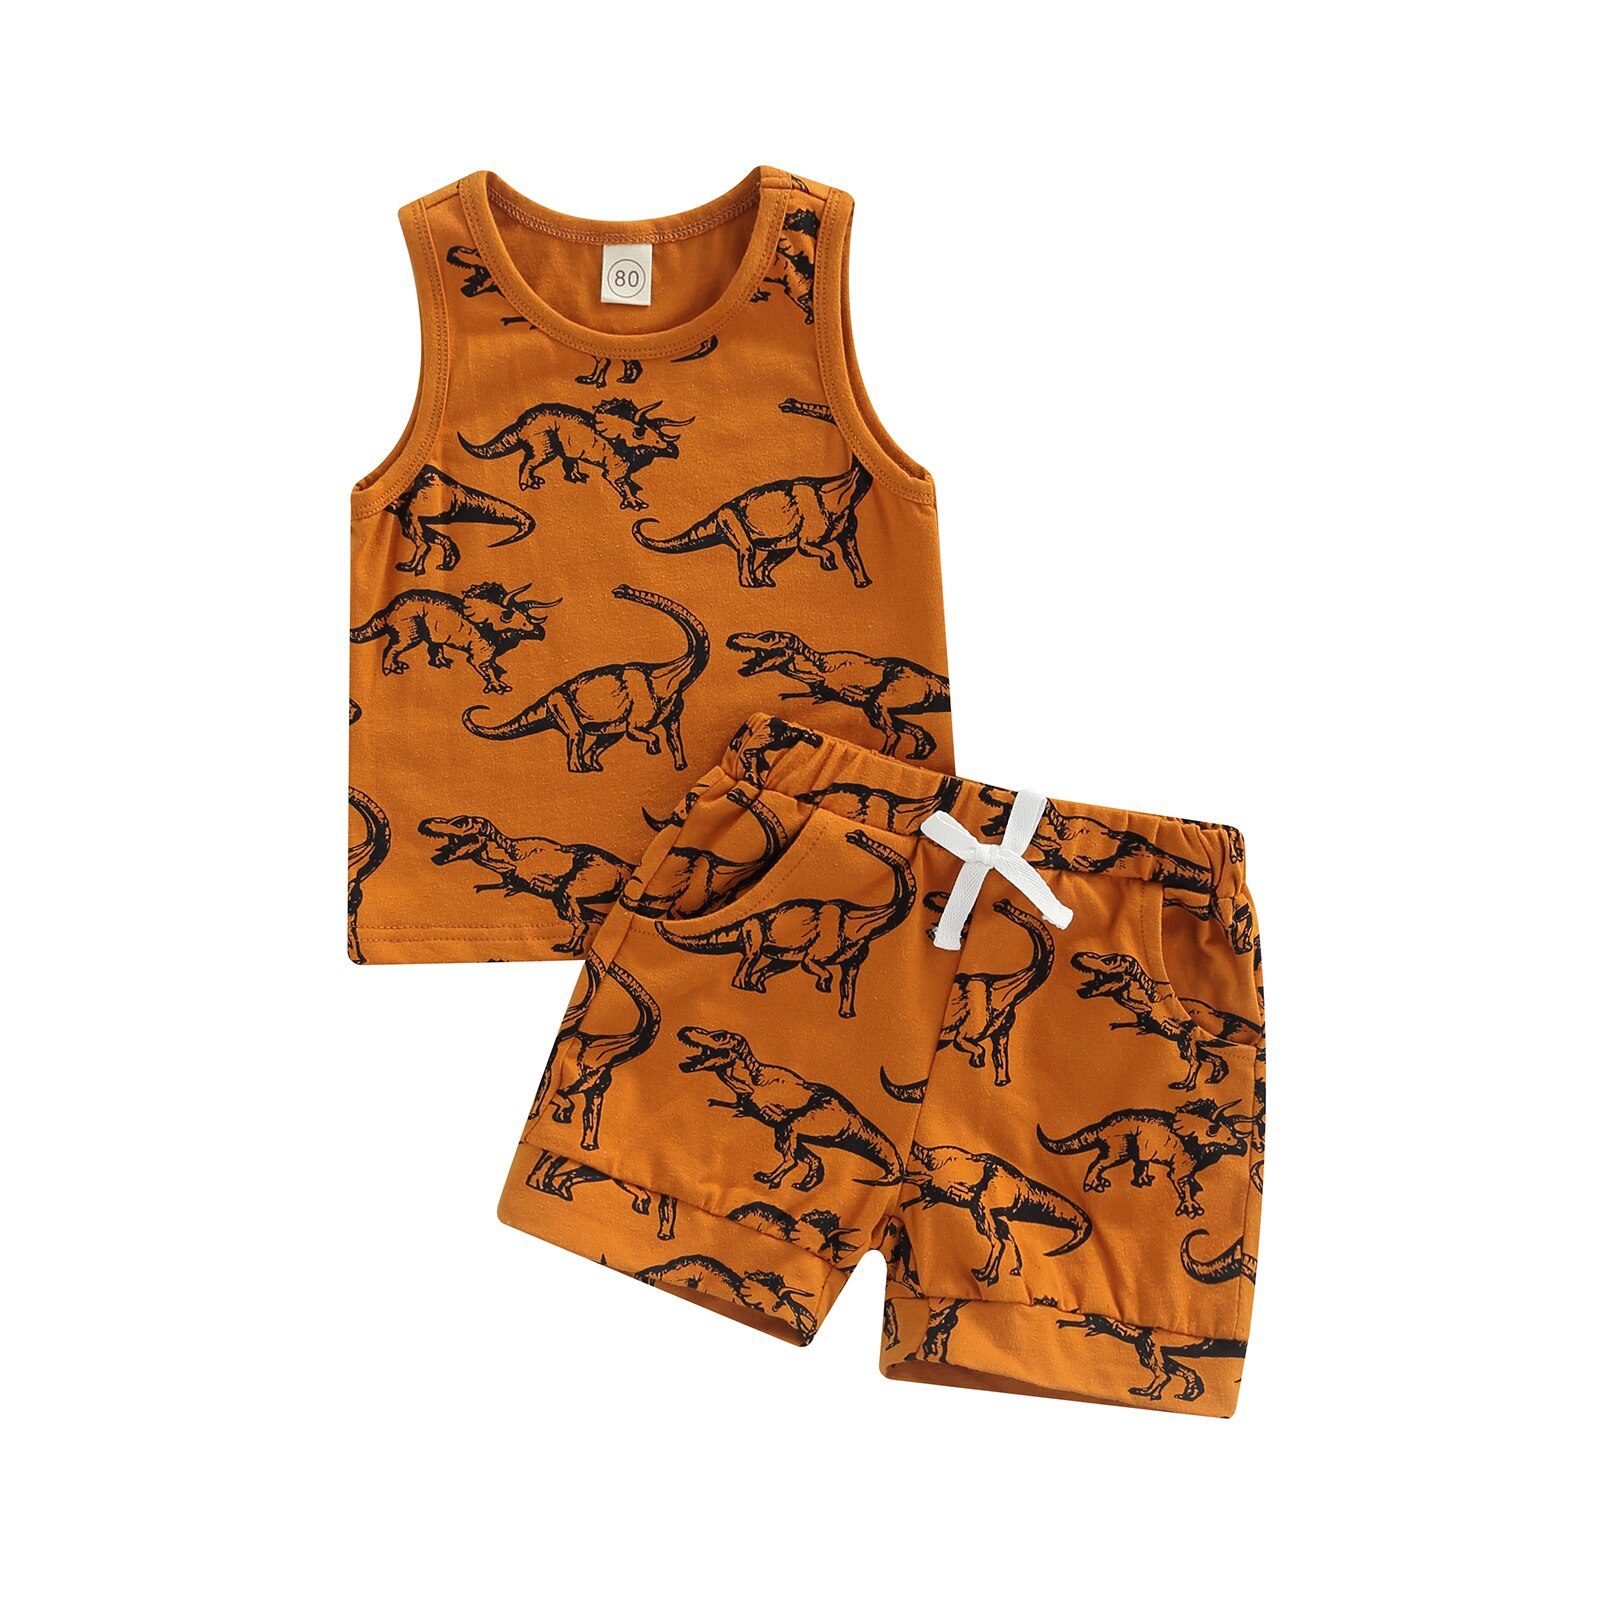 Baby Jongens Shorts Set, Dinosaurus Print Tank Top Met Elastische Taille Shorts Zomer Outfit